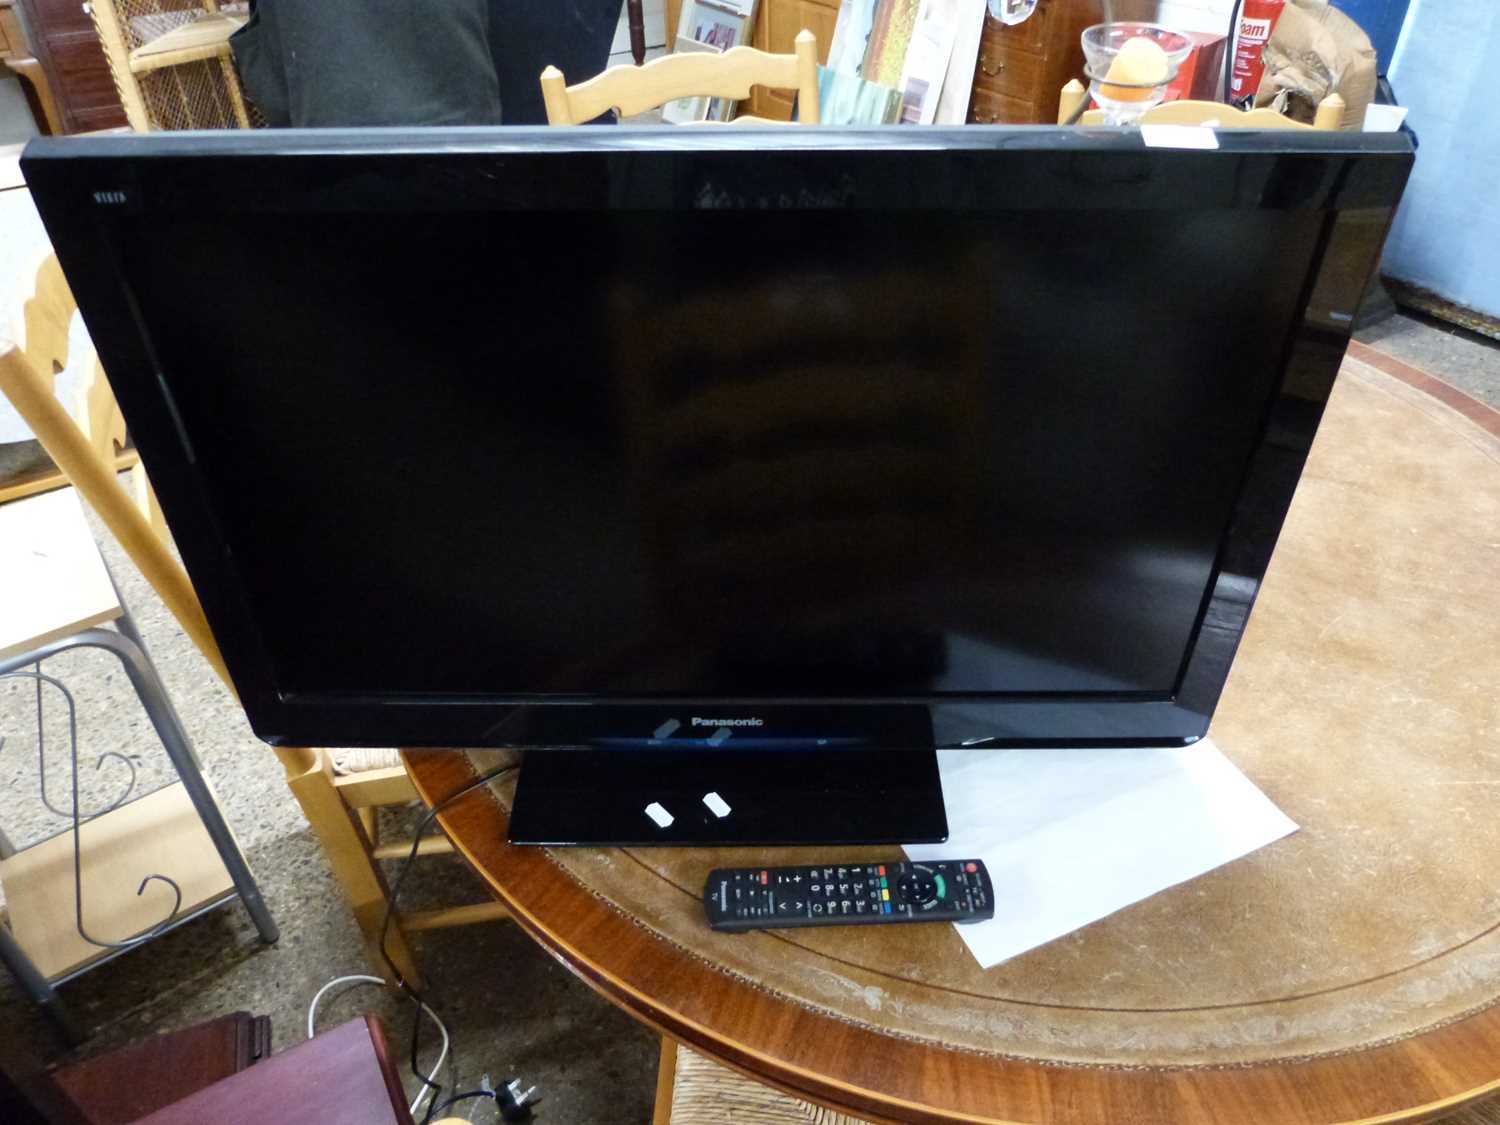 Lot 285 - Panasonic flat screen television